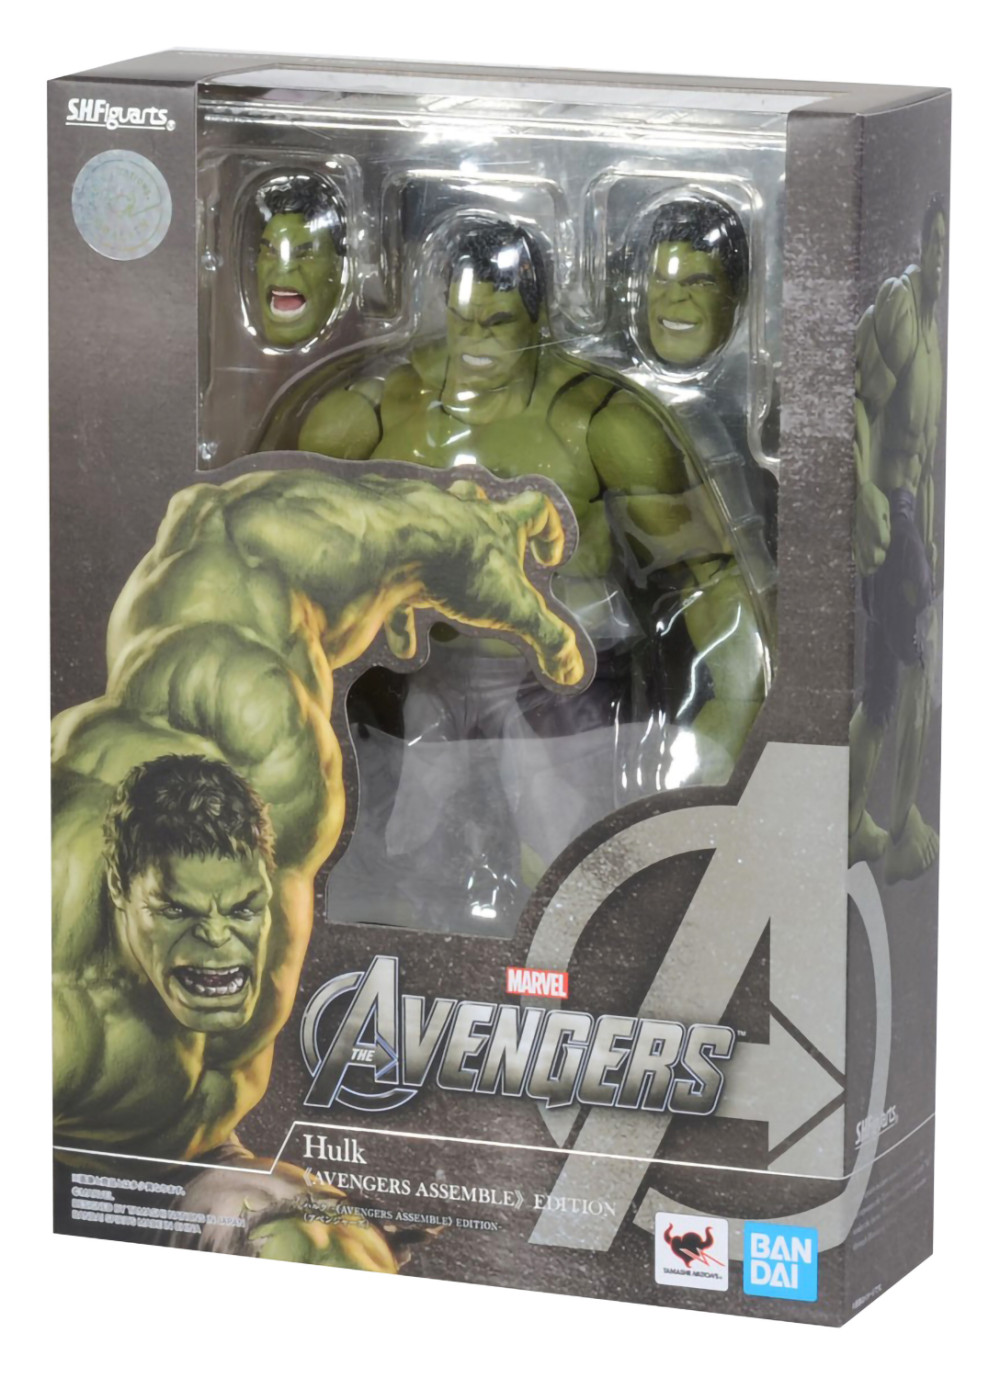  S.H.Figuarts: Avengers  Hulk Avengers Assemble Edition (19 )